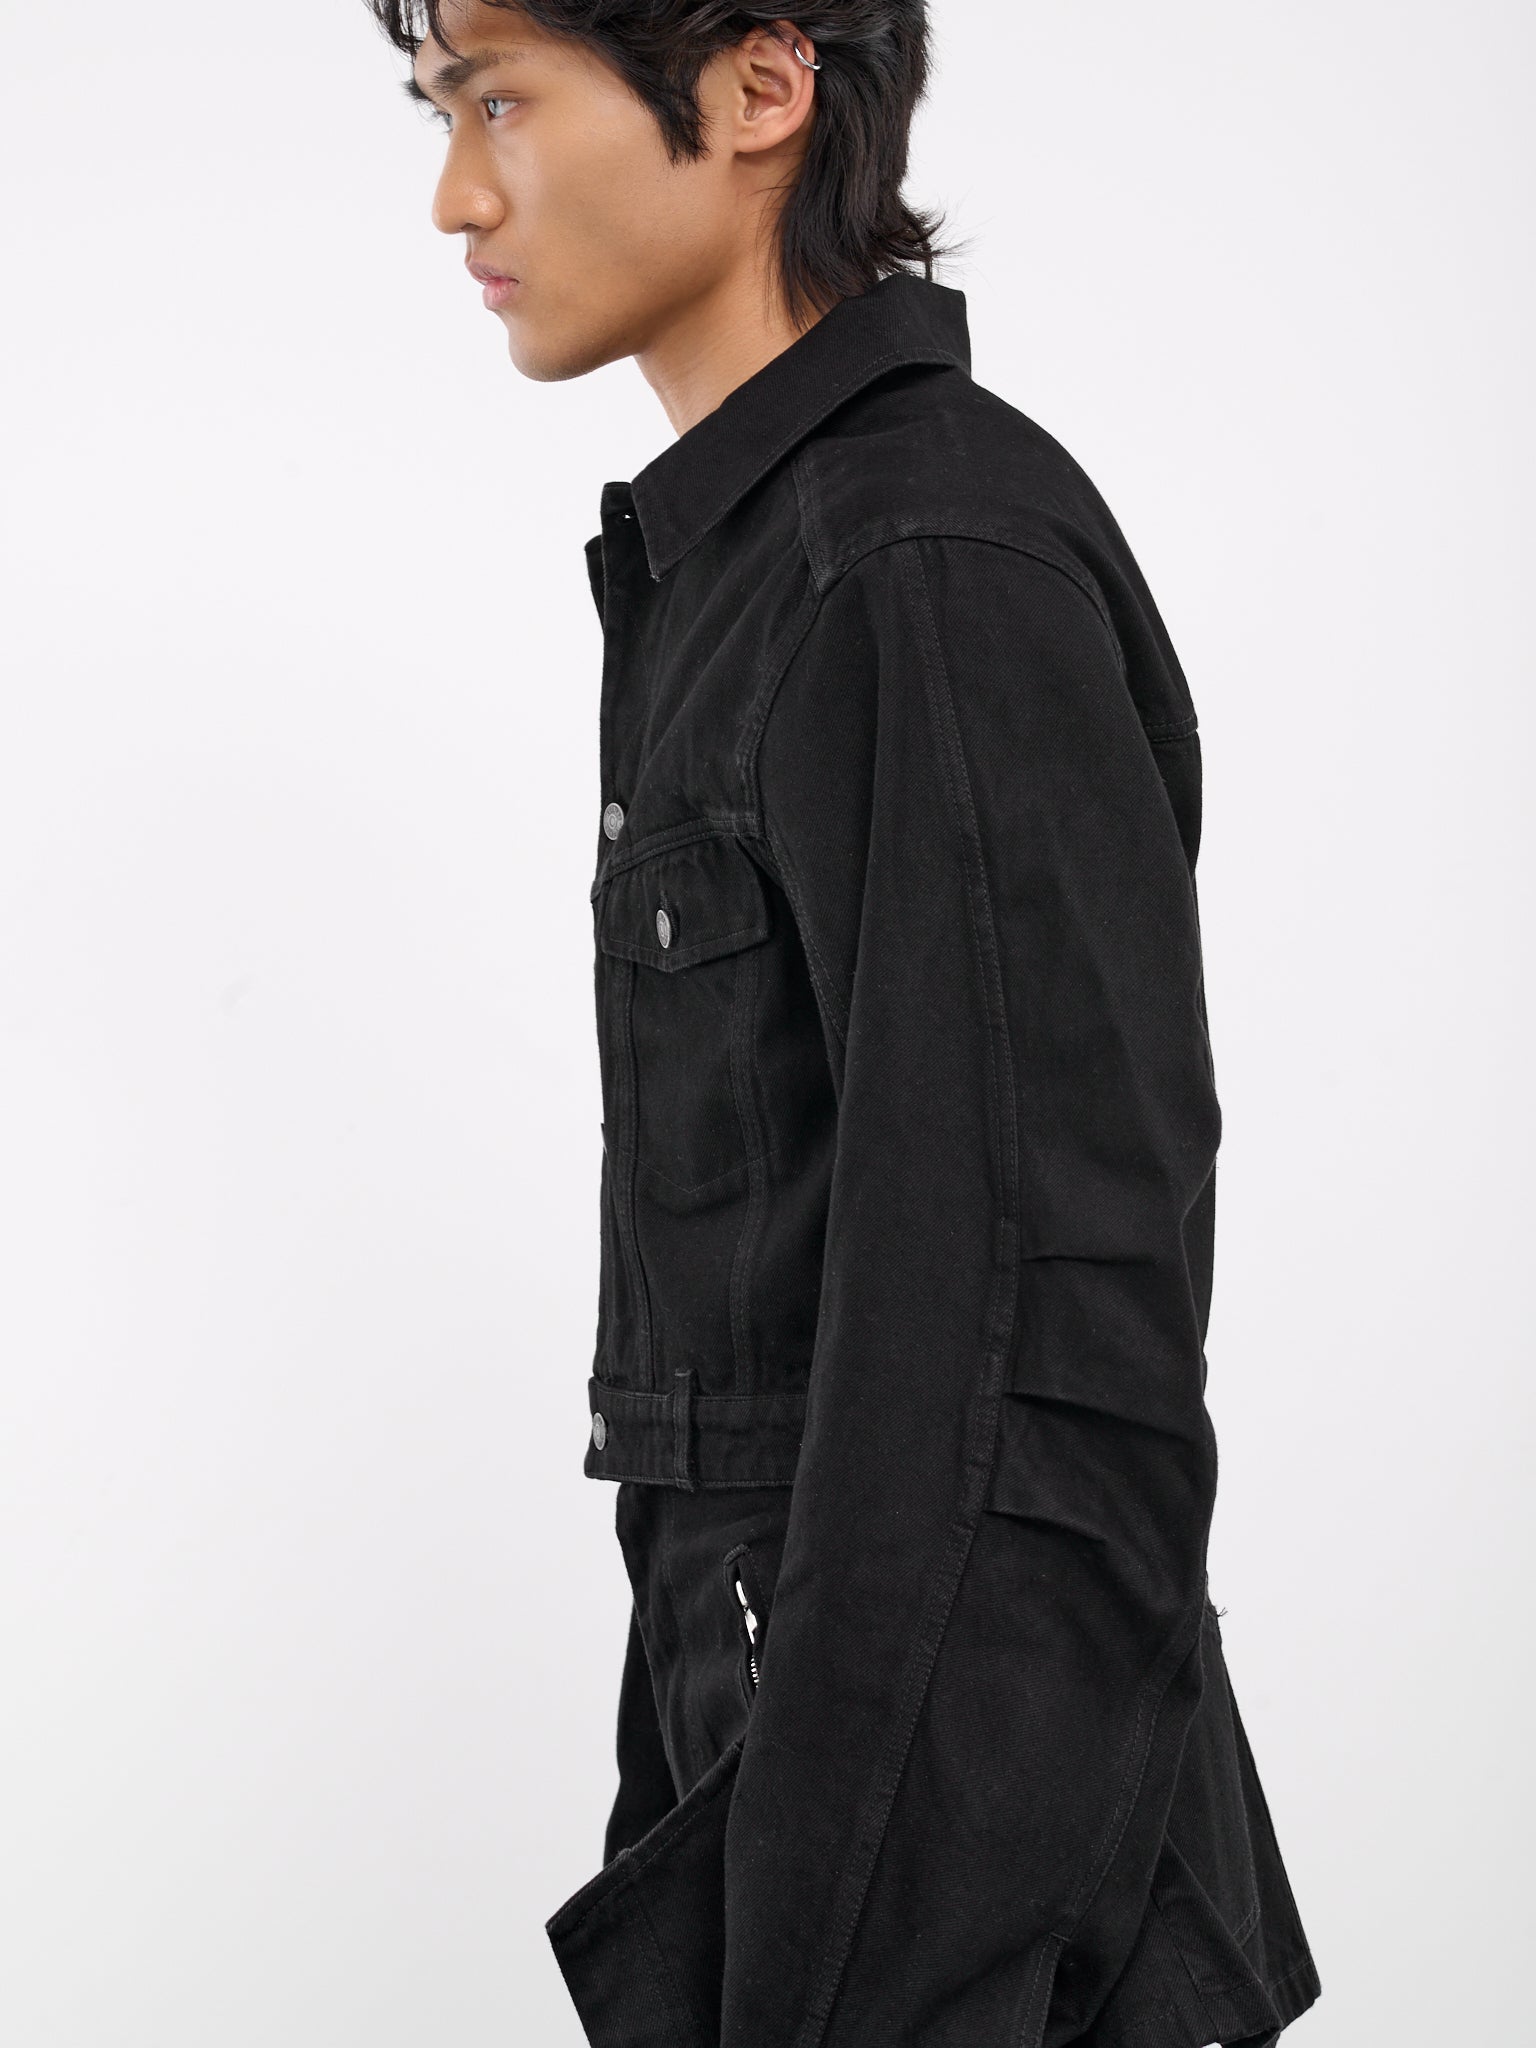 Deconstructed Denim Jacket (OU-003-C-RAW-BLACK)